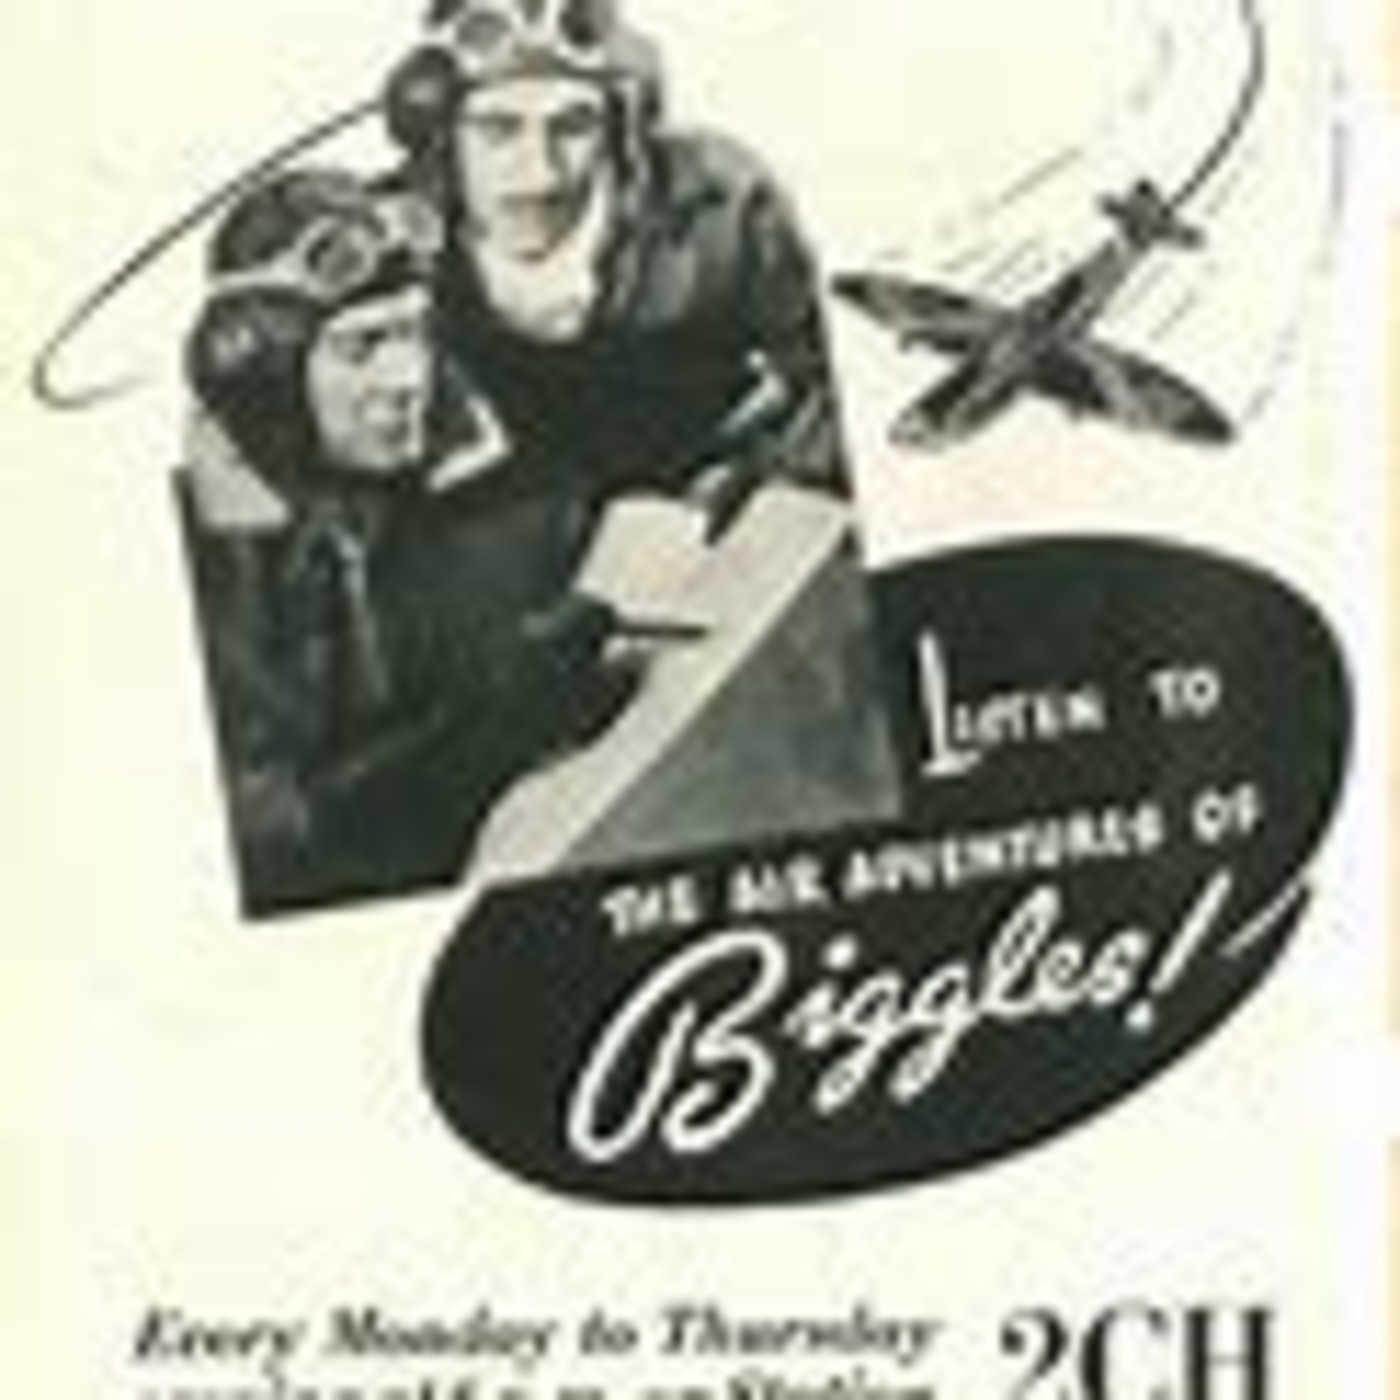 Air Adventures of Biggles xx-xx-xx International Brigade (28)